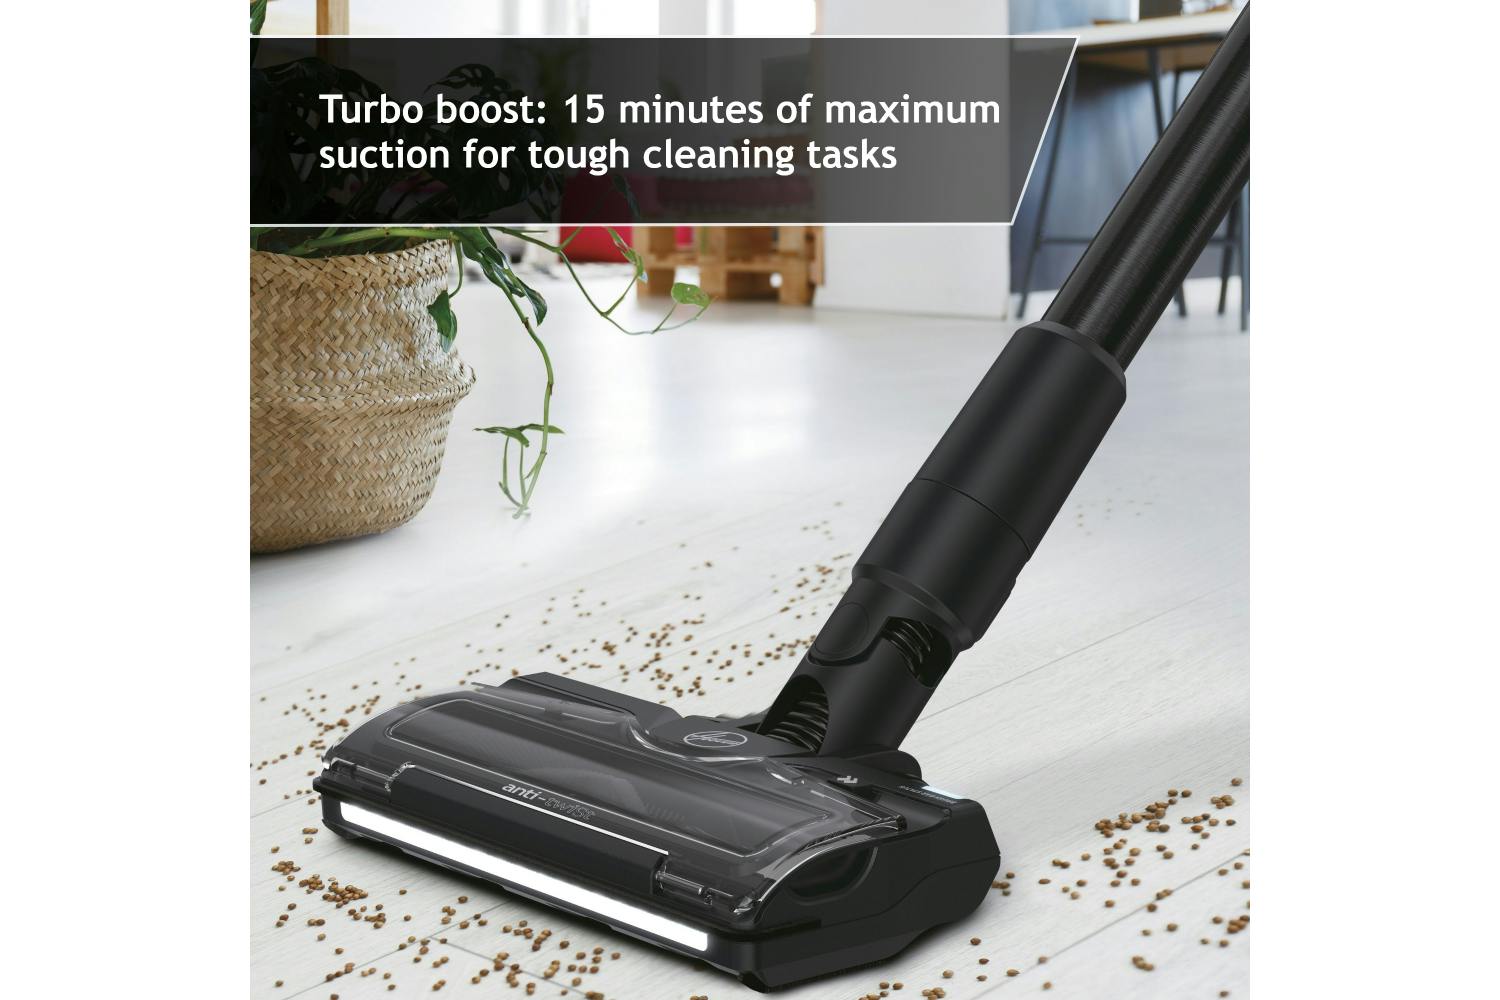 Europet HI-TECH Profi-Cleany (4 in 1 vacuum cleaner)